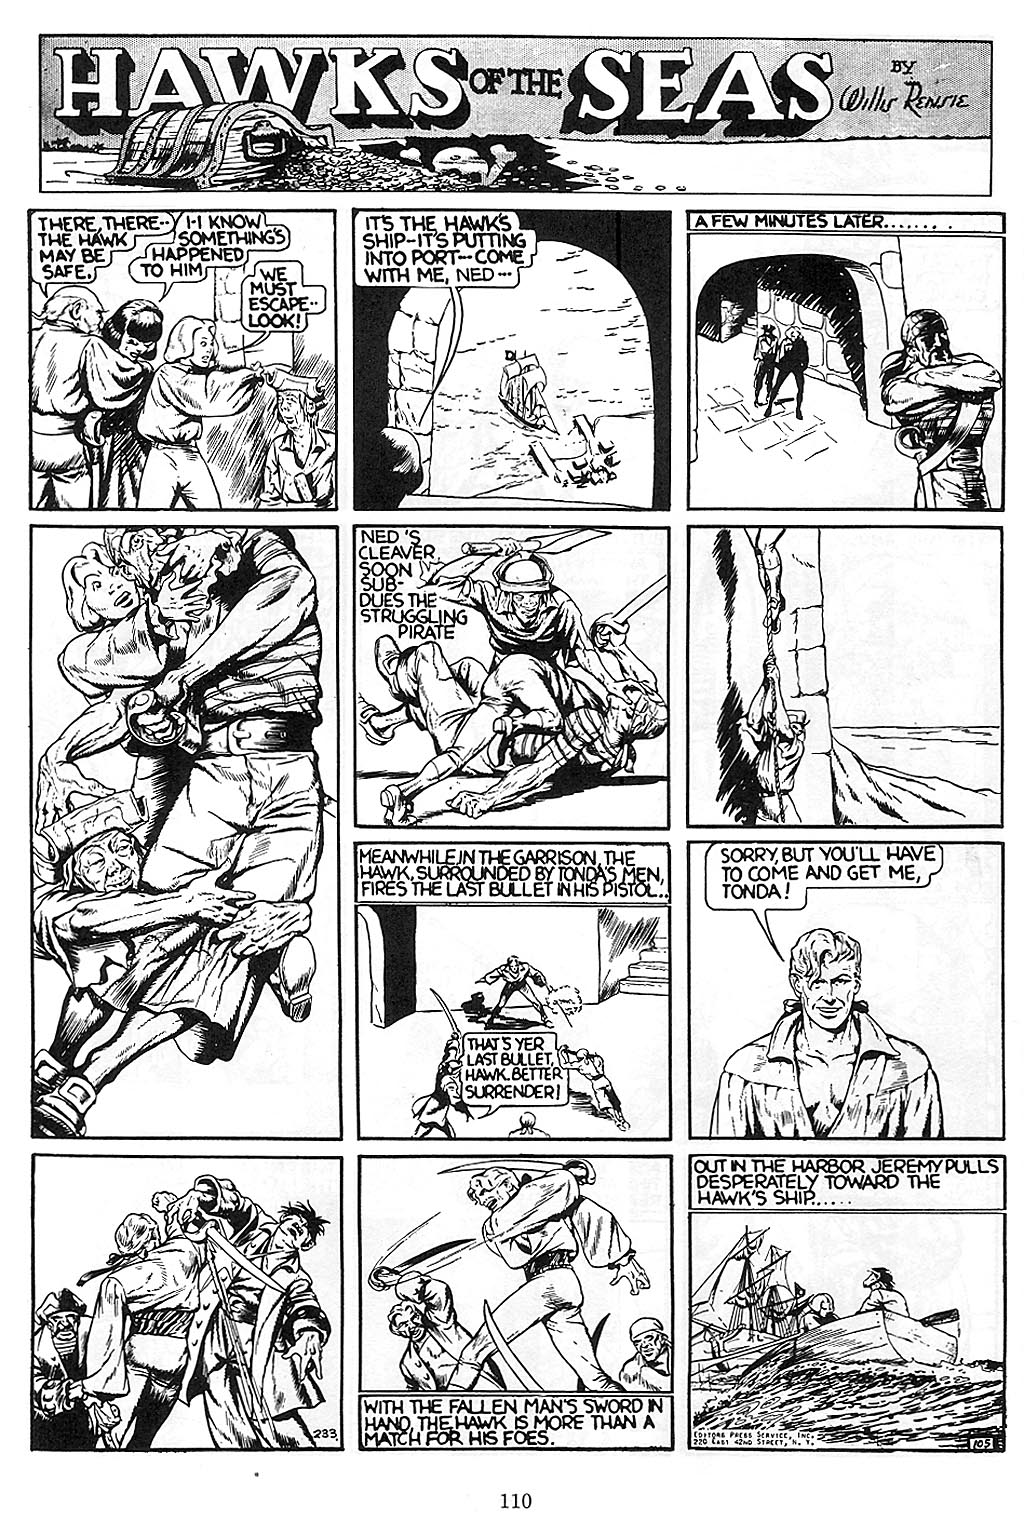 Read online Will Eisner's Hawks of the Seas comic -  Issue # TPB - 111